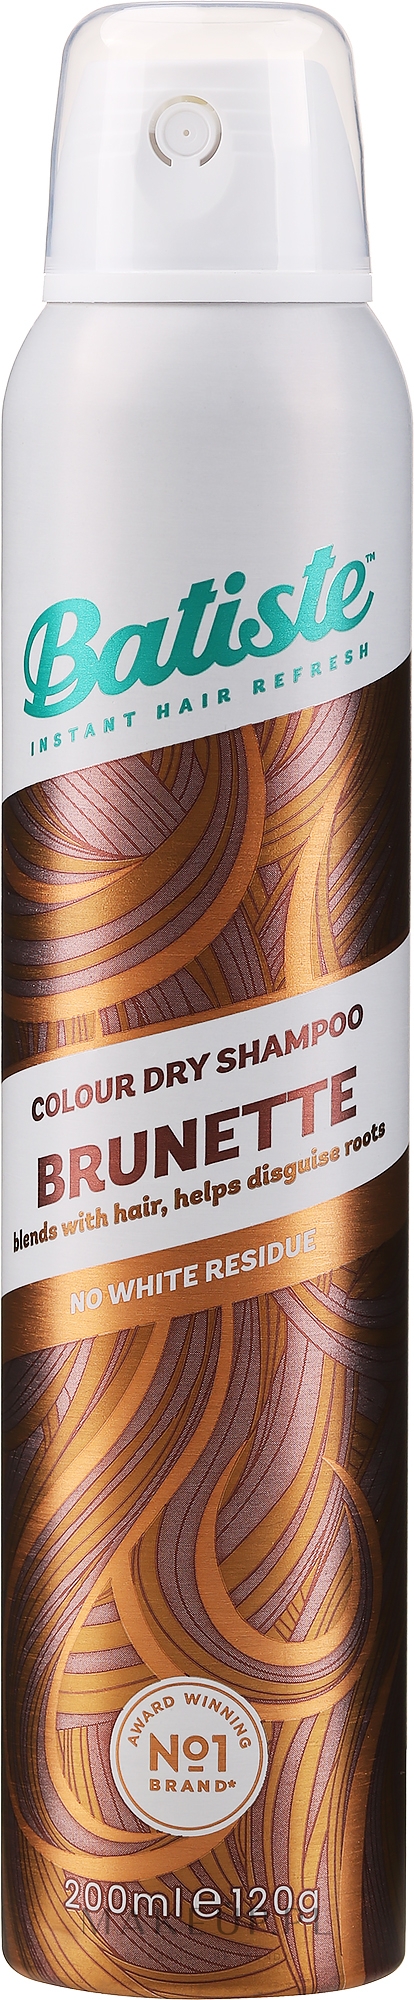 batiste suchy szampon dla brunetek wizaz